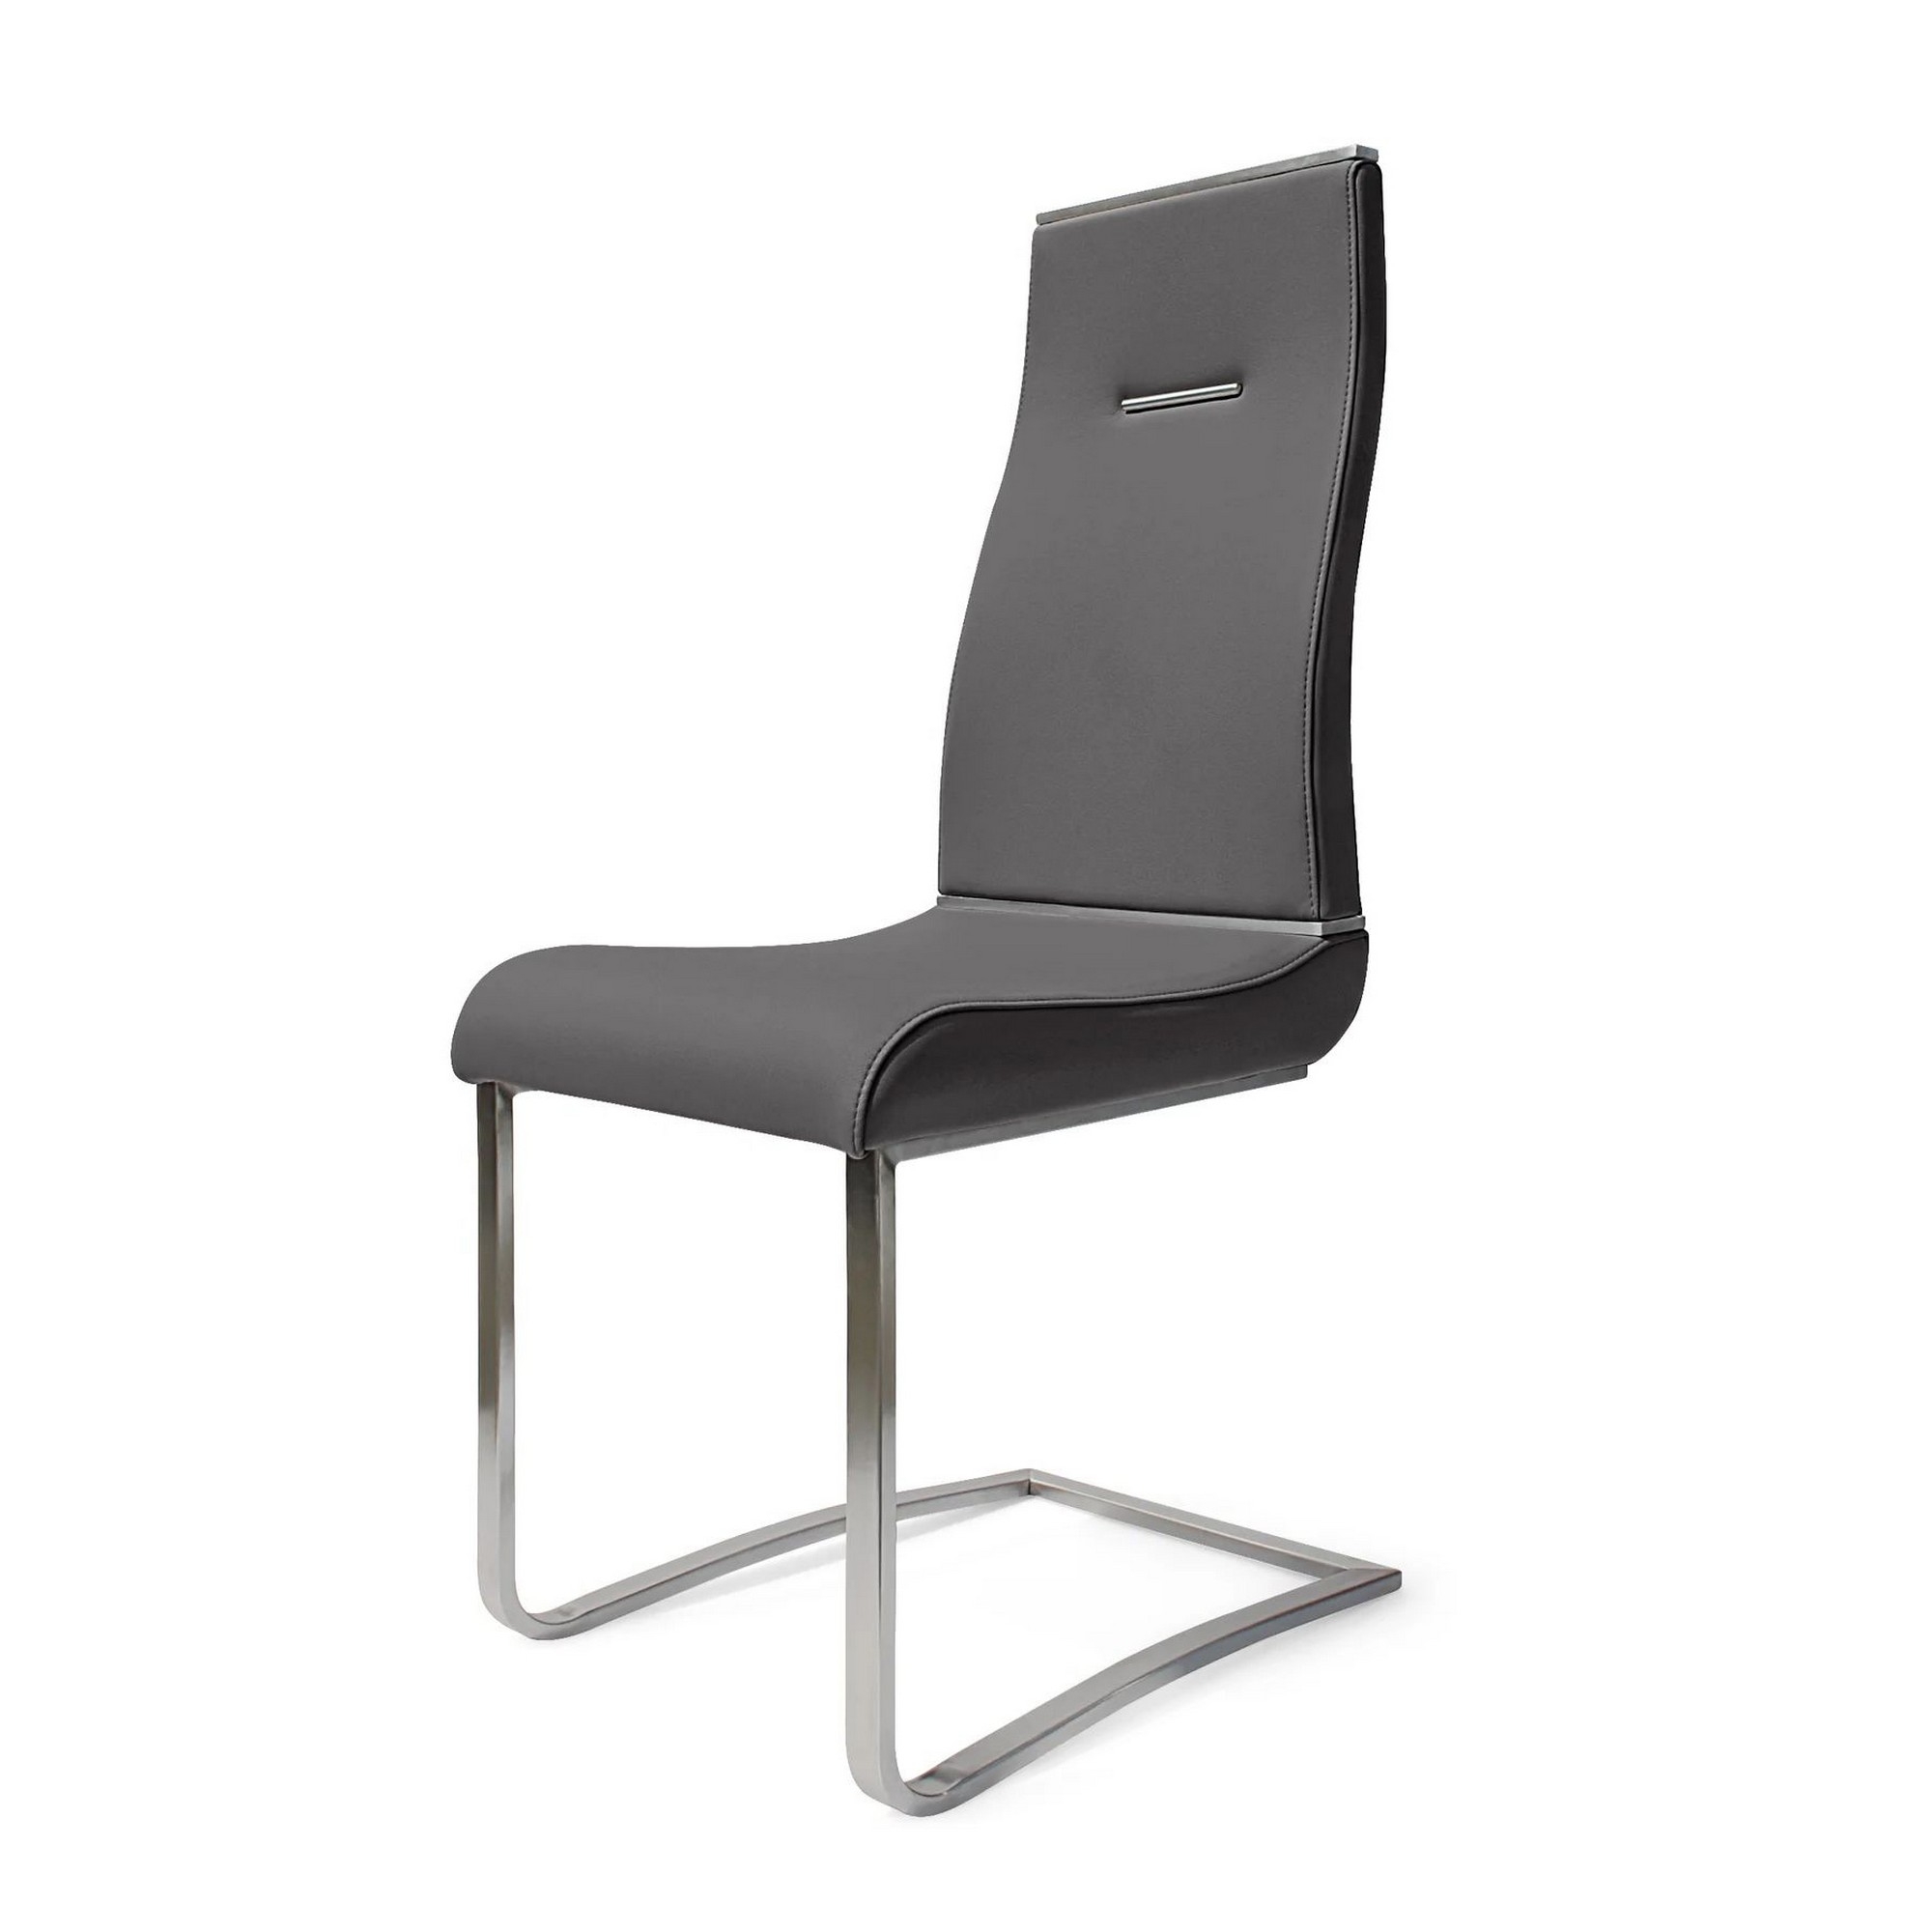 Jon 22 Inch Dining Chair, Set Of 2, Cantilever, Dark Gray Faux Leather - Saltoro Sherpi